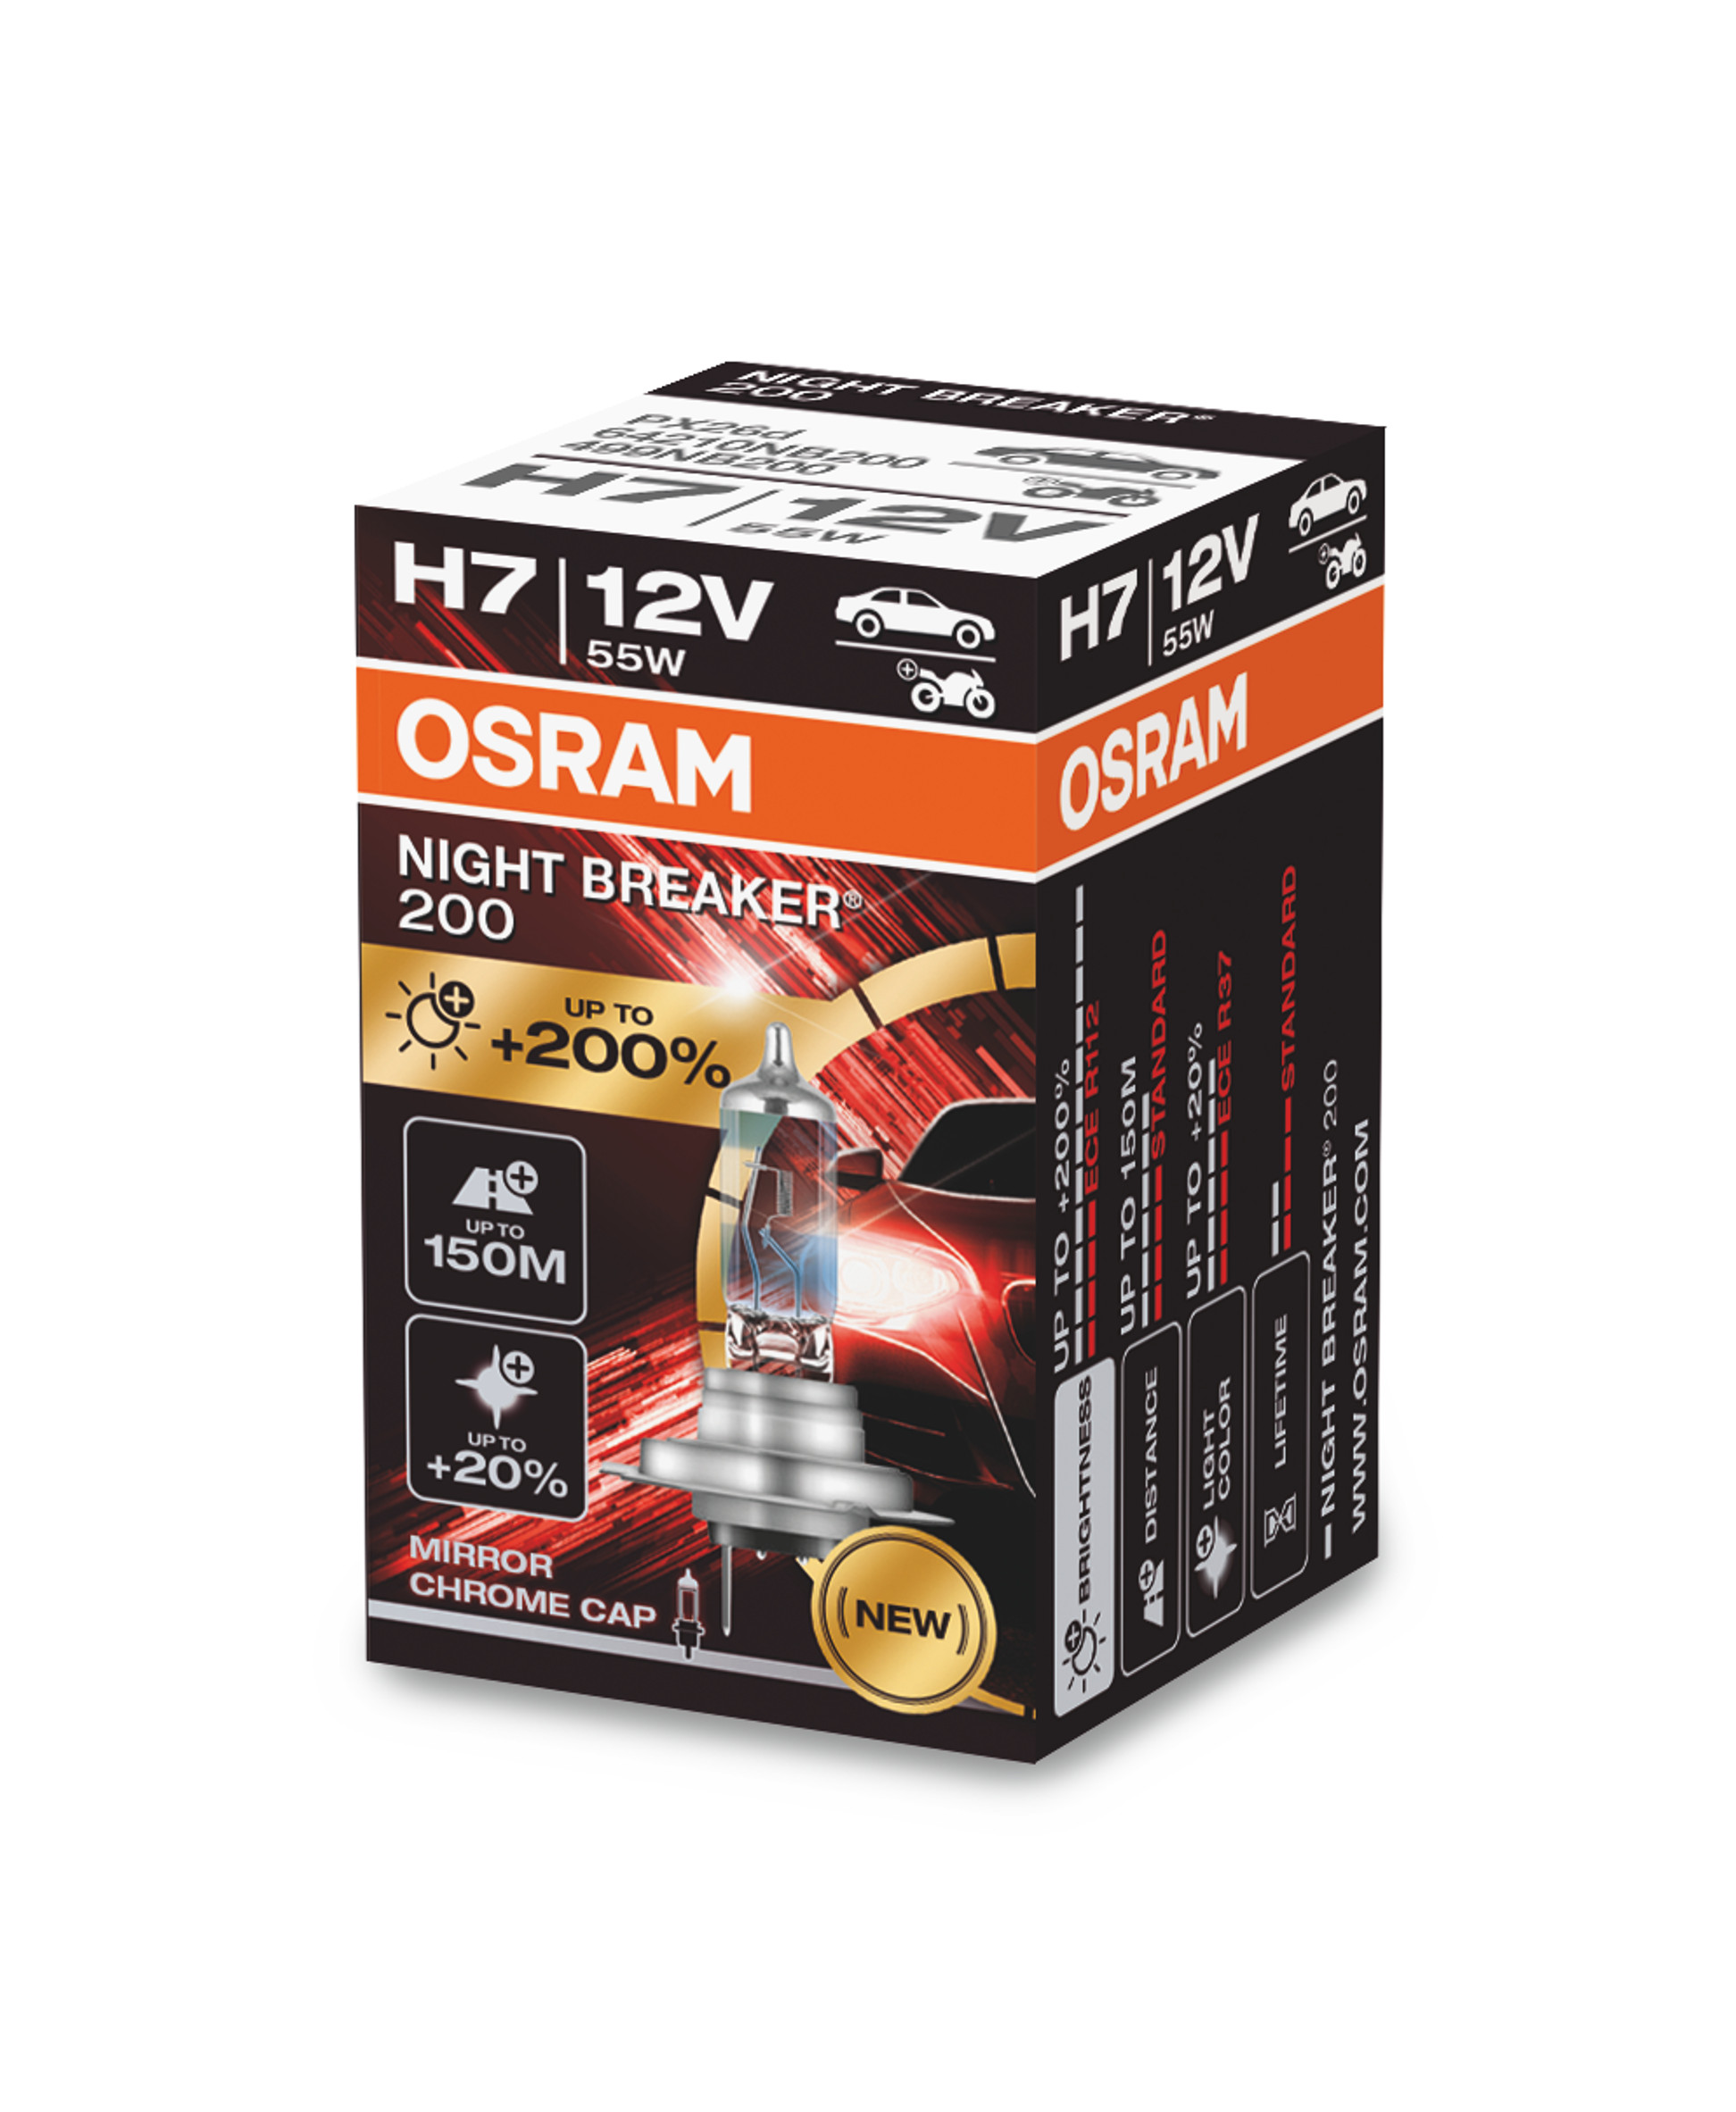 Osram Night Breaker 200 Halogen H4 H7 H11 All Types Free Choice 1pcs